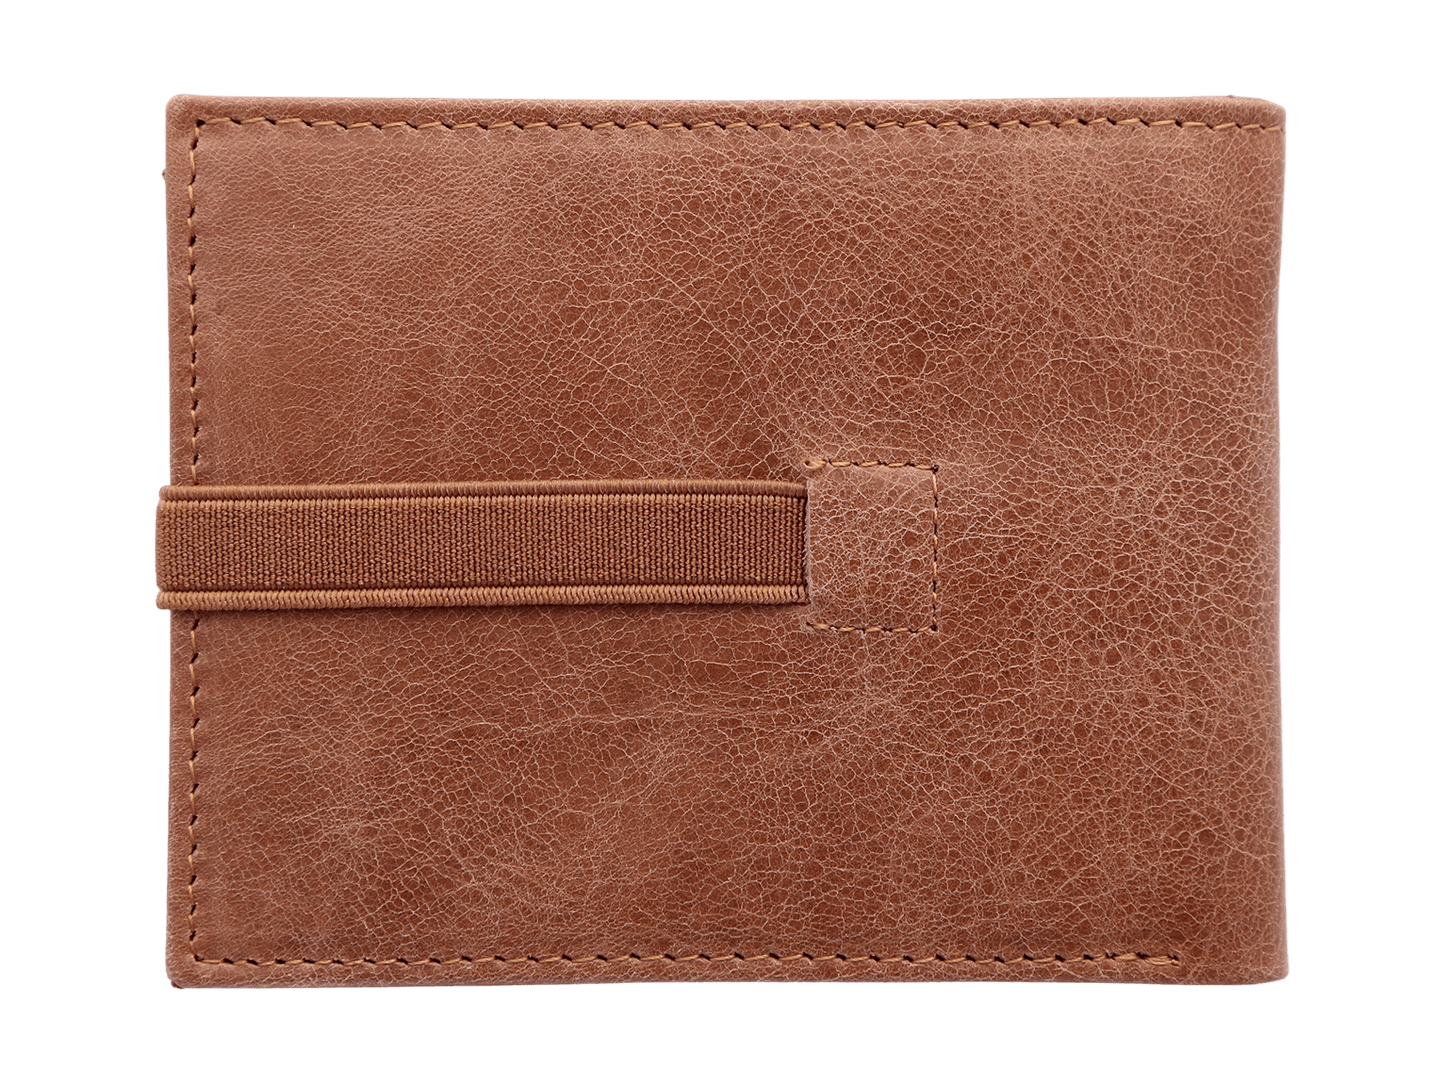 The Maxy Strap Wallet in Savannah Brown #savannah-brown